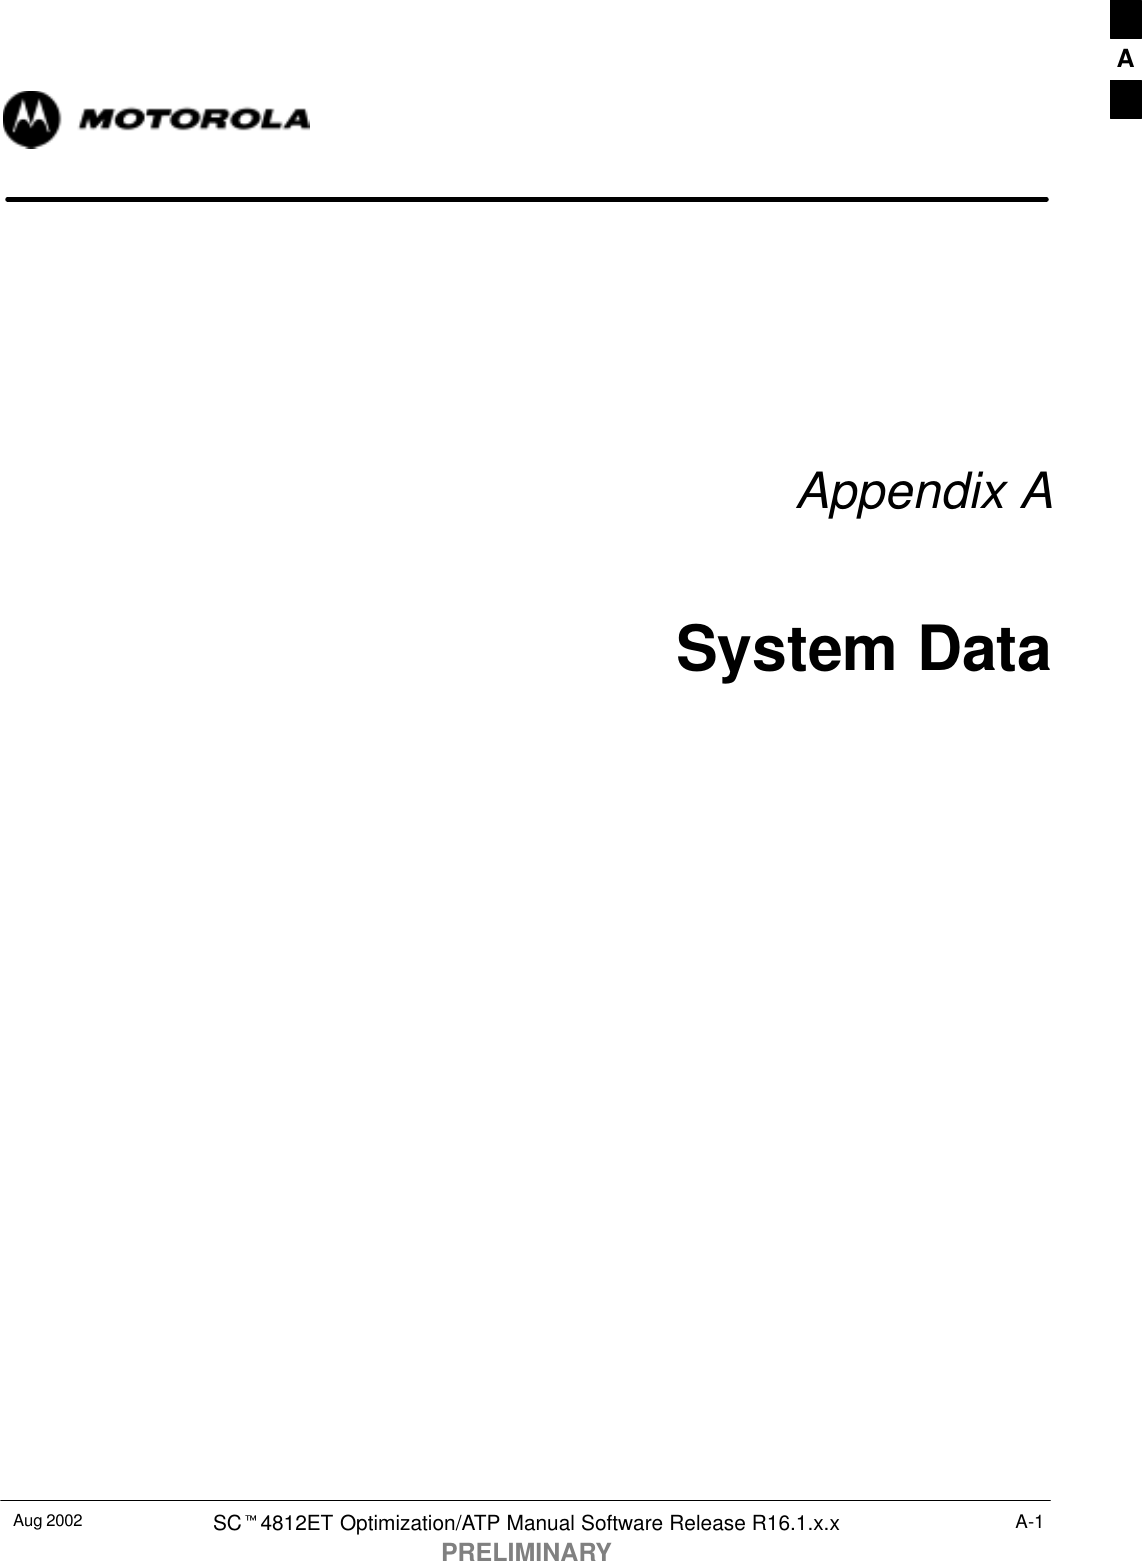 Aug 2002 SCt4812ET Optimization/ATP Manual Software Release R16.1.x.xPRELIMINARYA-1Appendix ASystem DataA